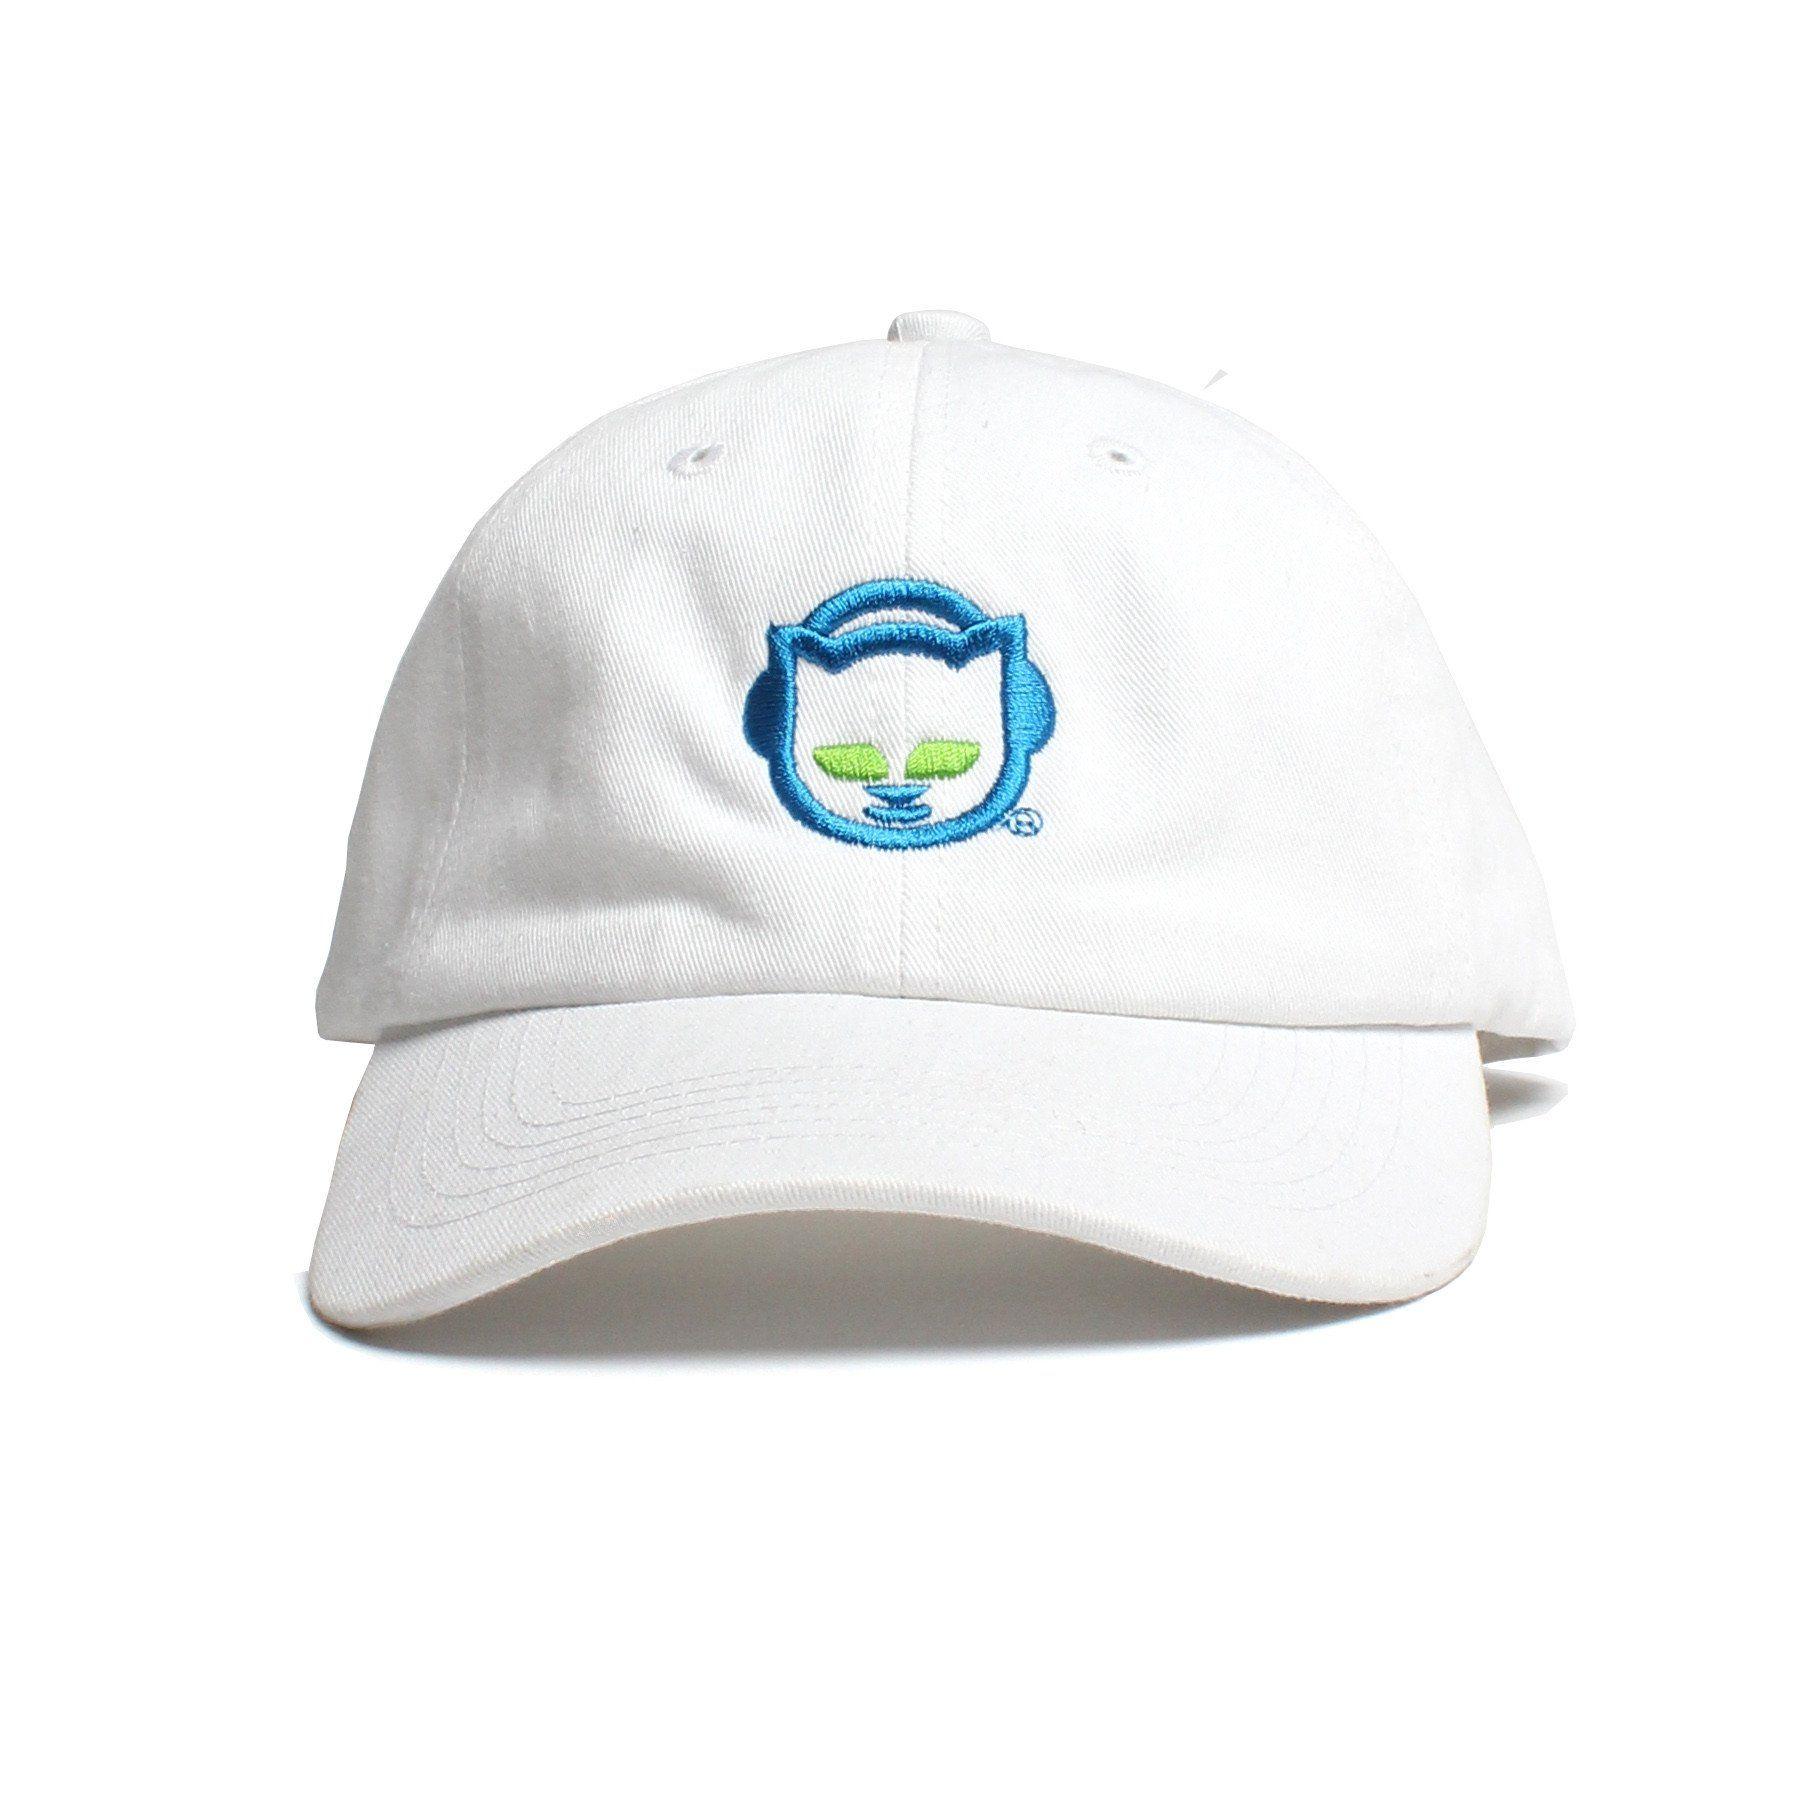 Napster Logo - Napster Logo embroidered cap by Altru Apparel